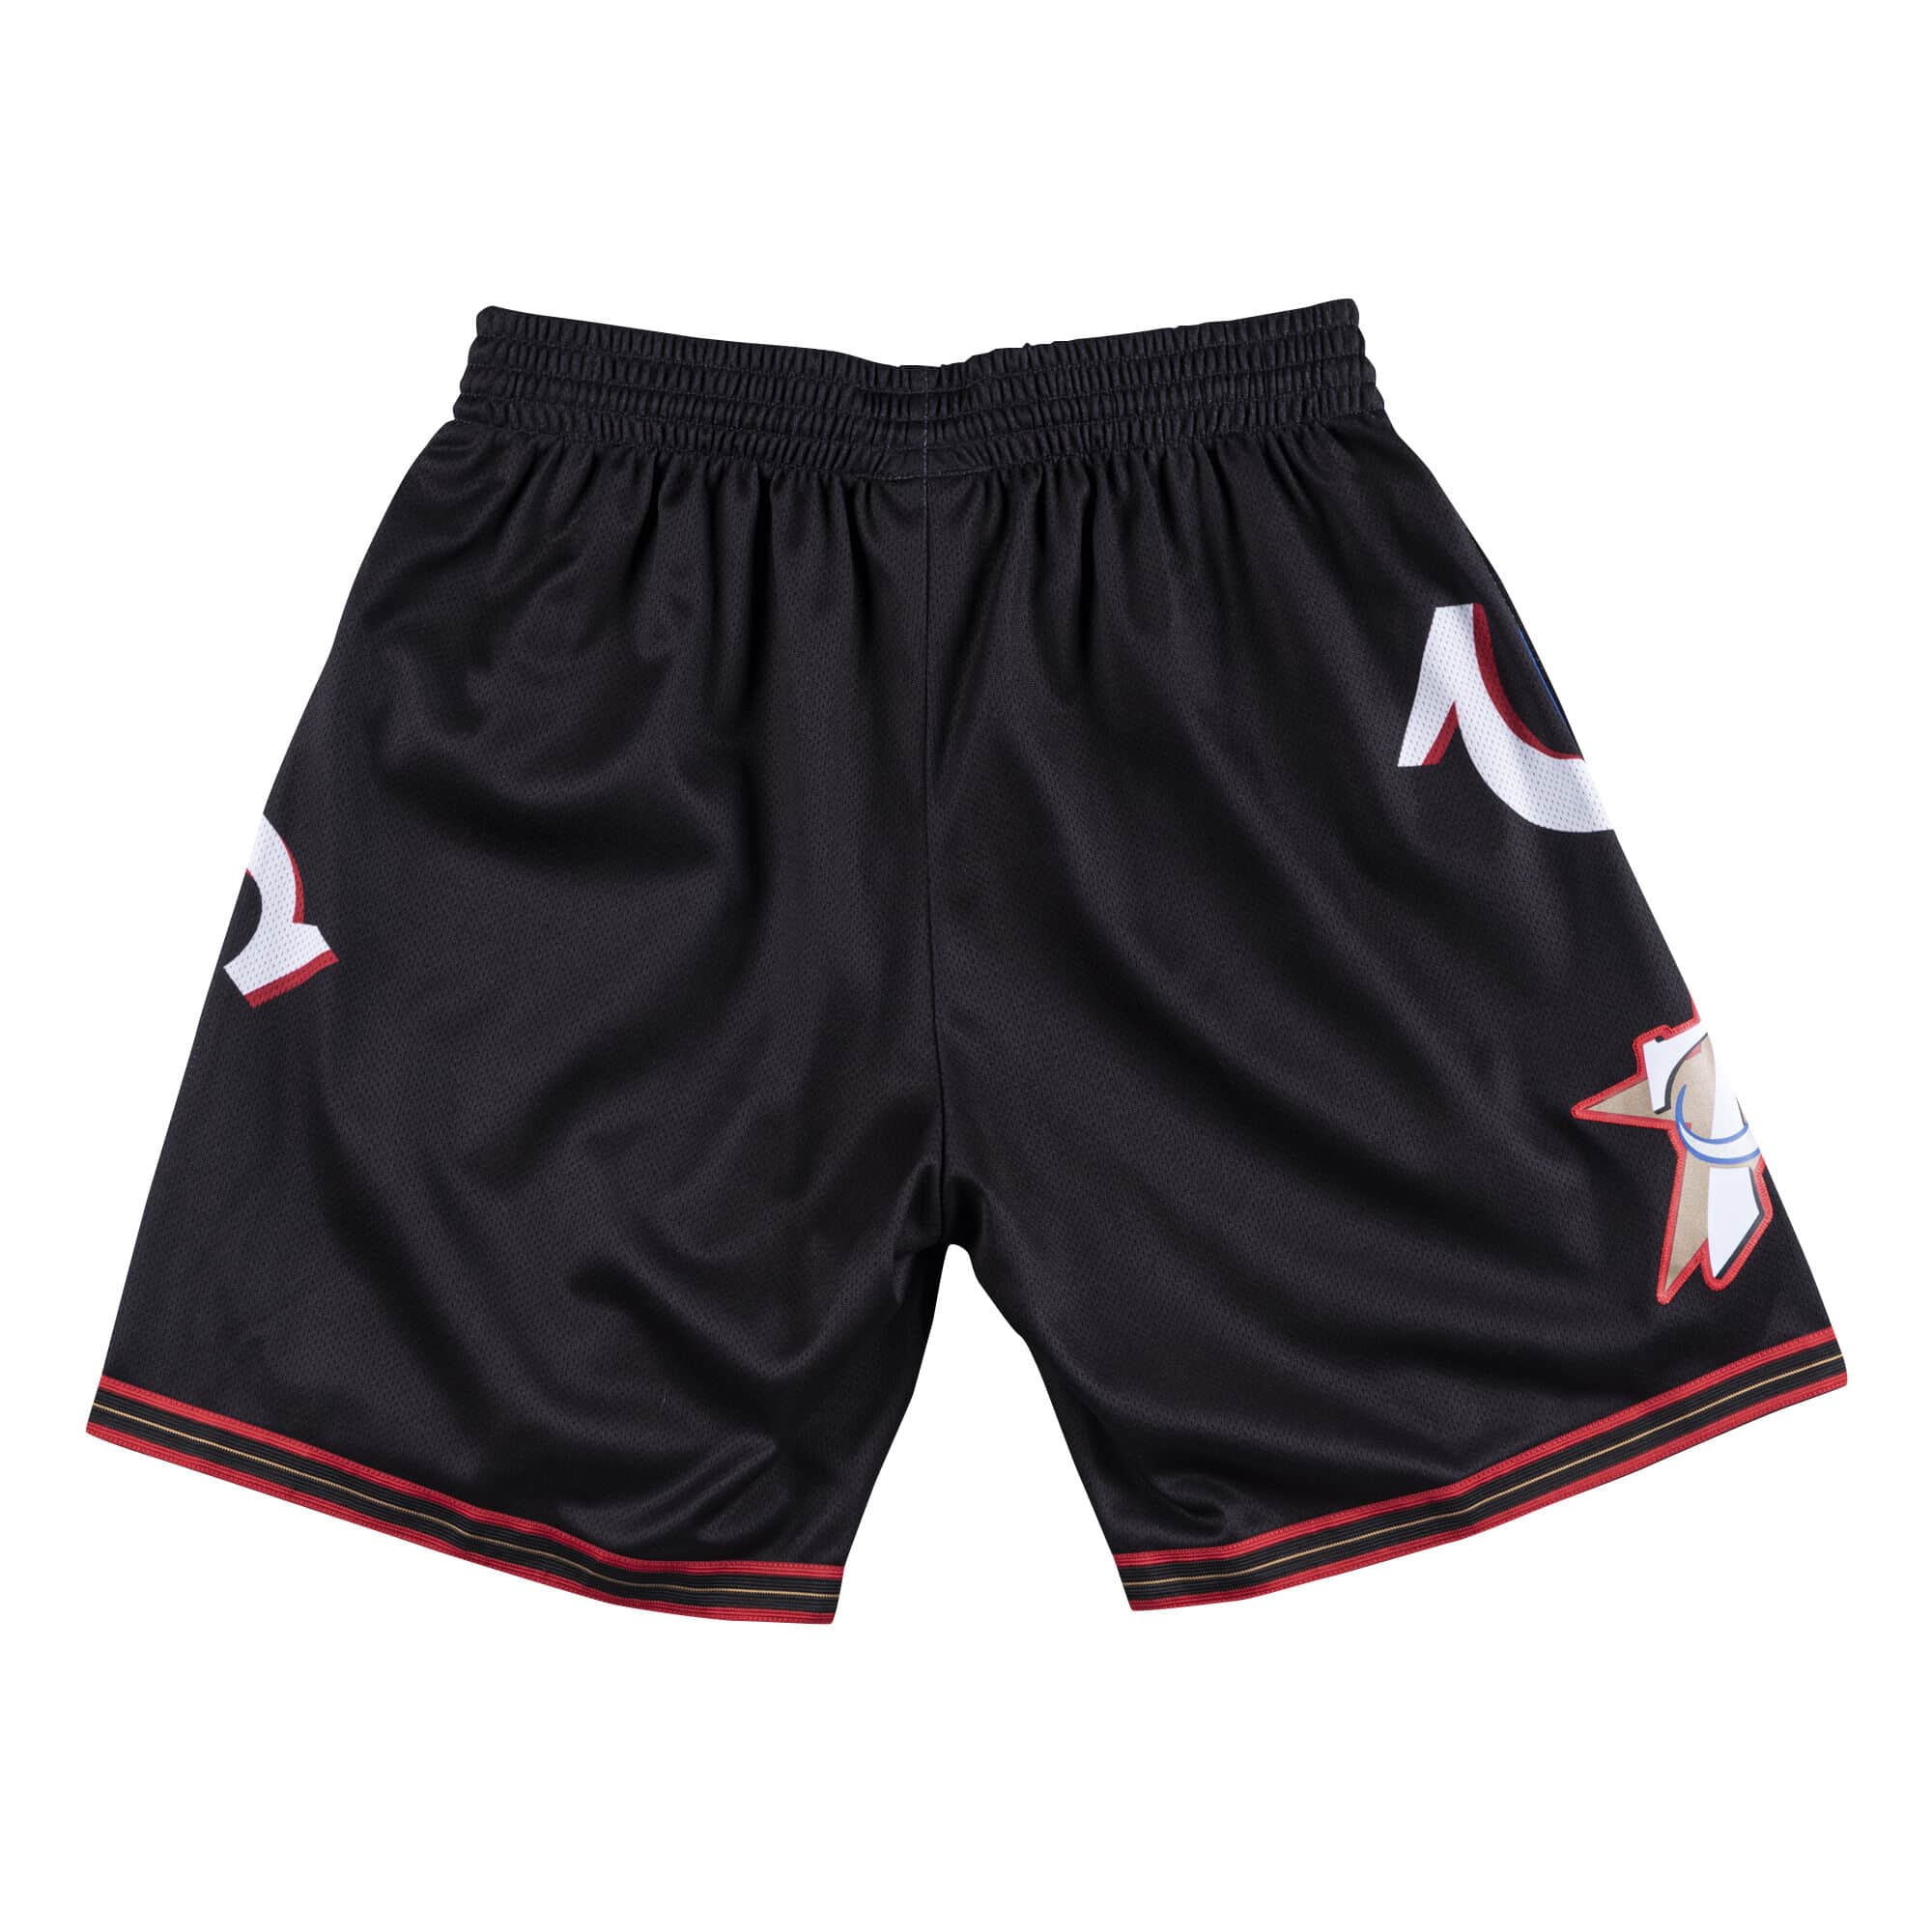 Mitchell & Ness NBA Big Face Chicago Bulls mesh shorts in black